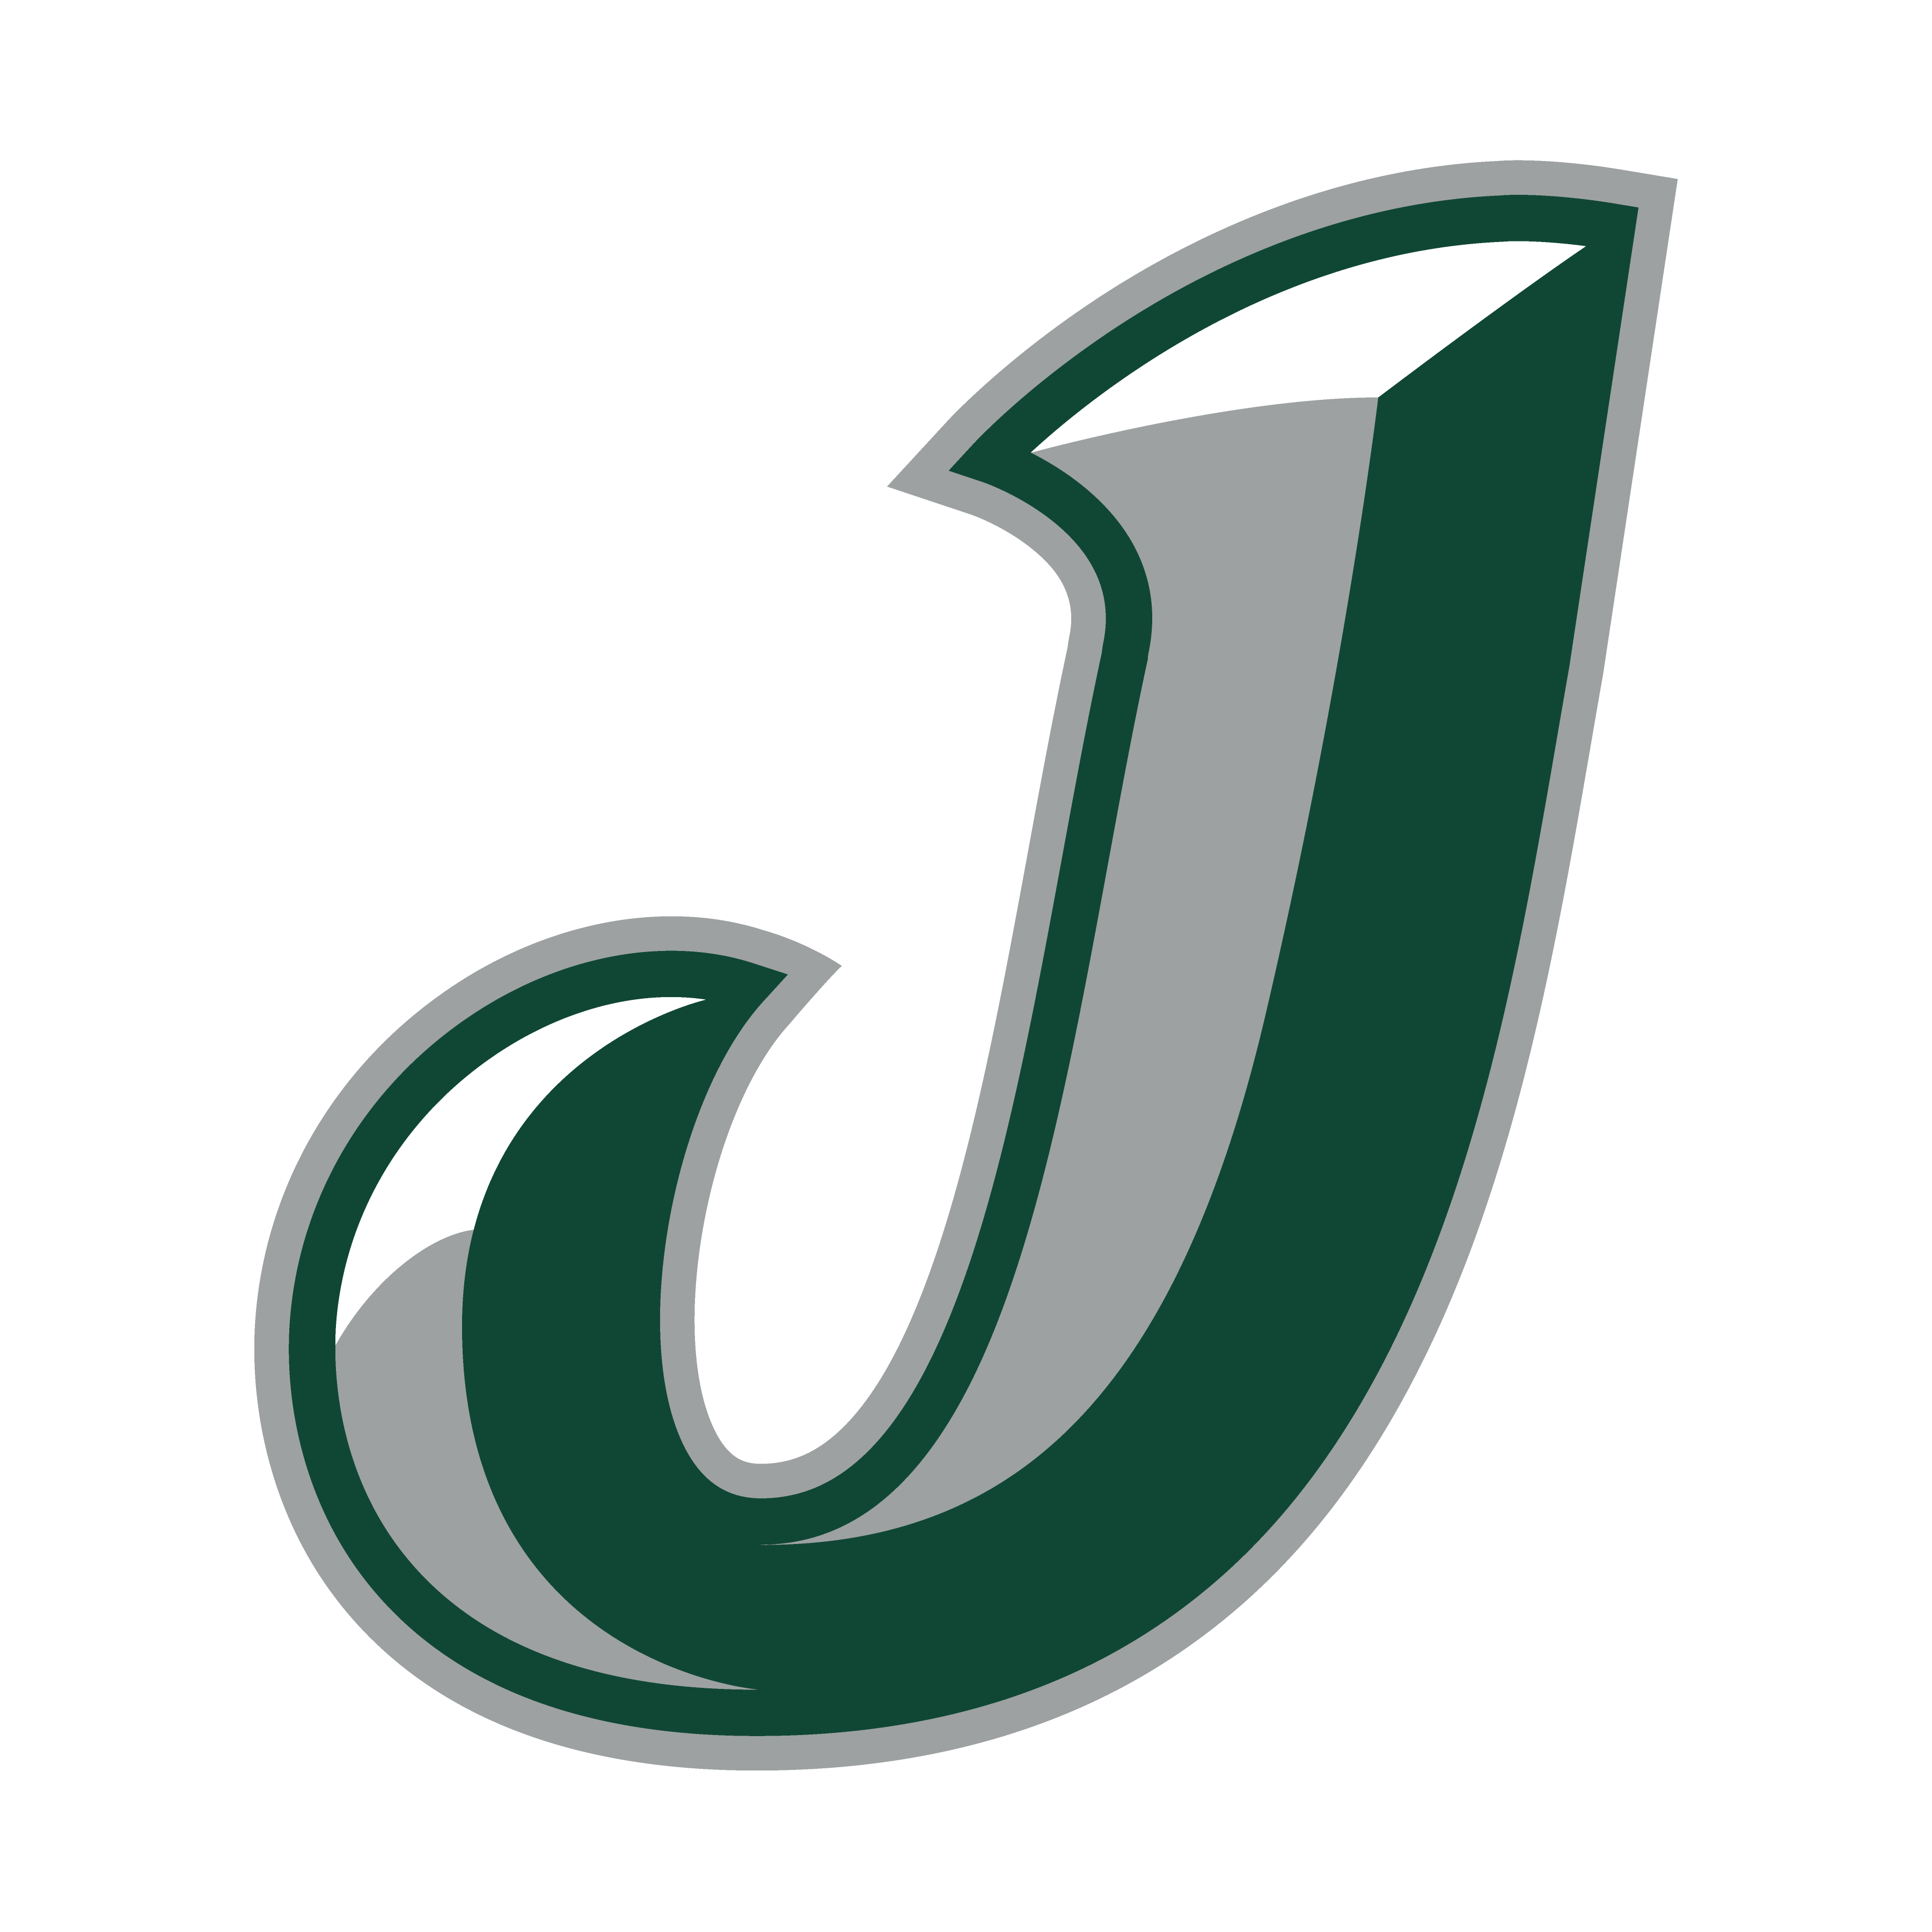 Jenison "J" icon